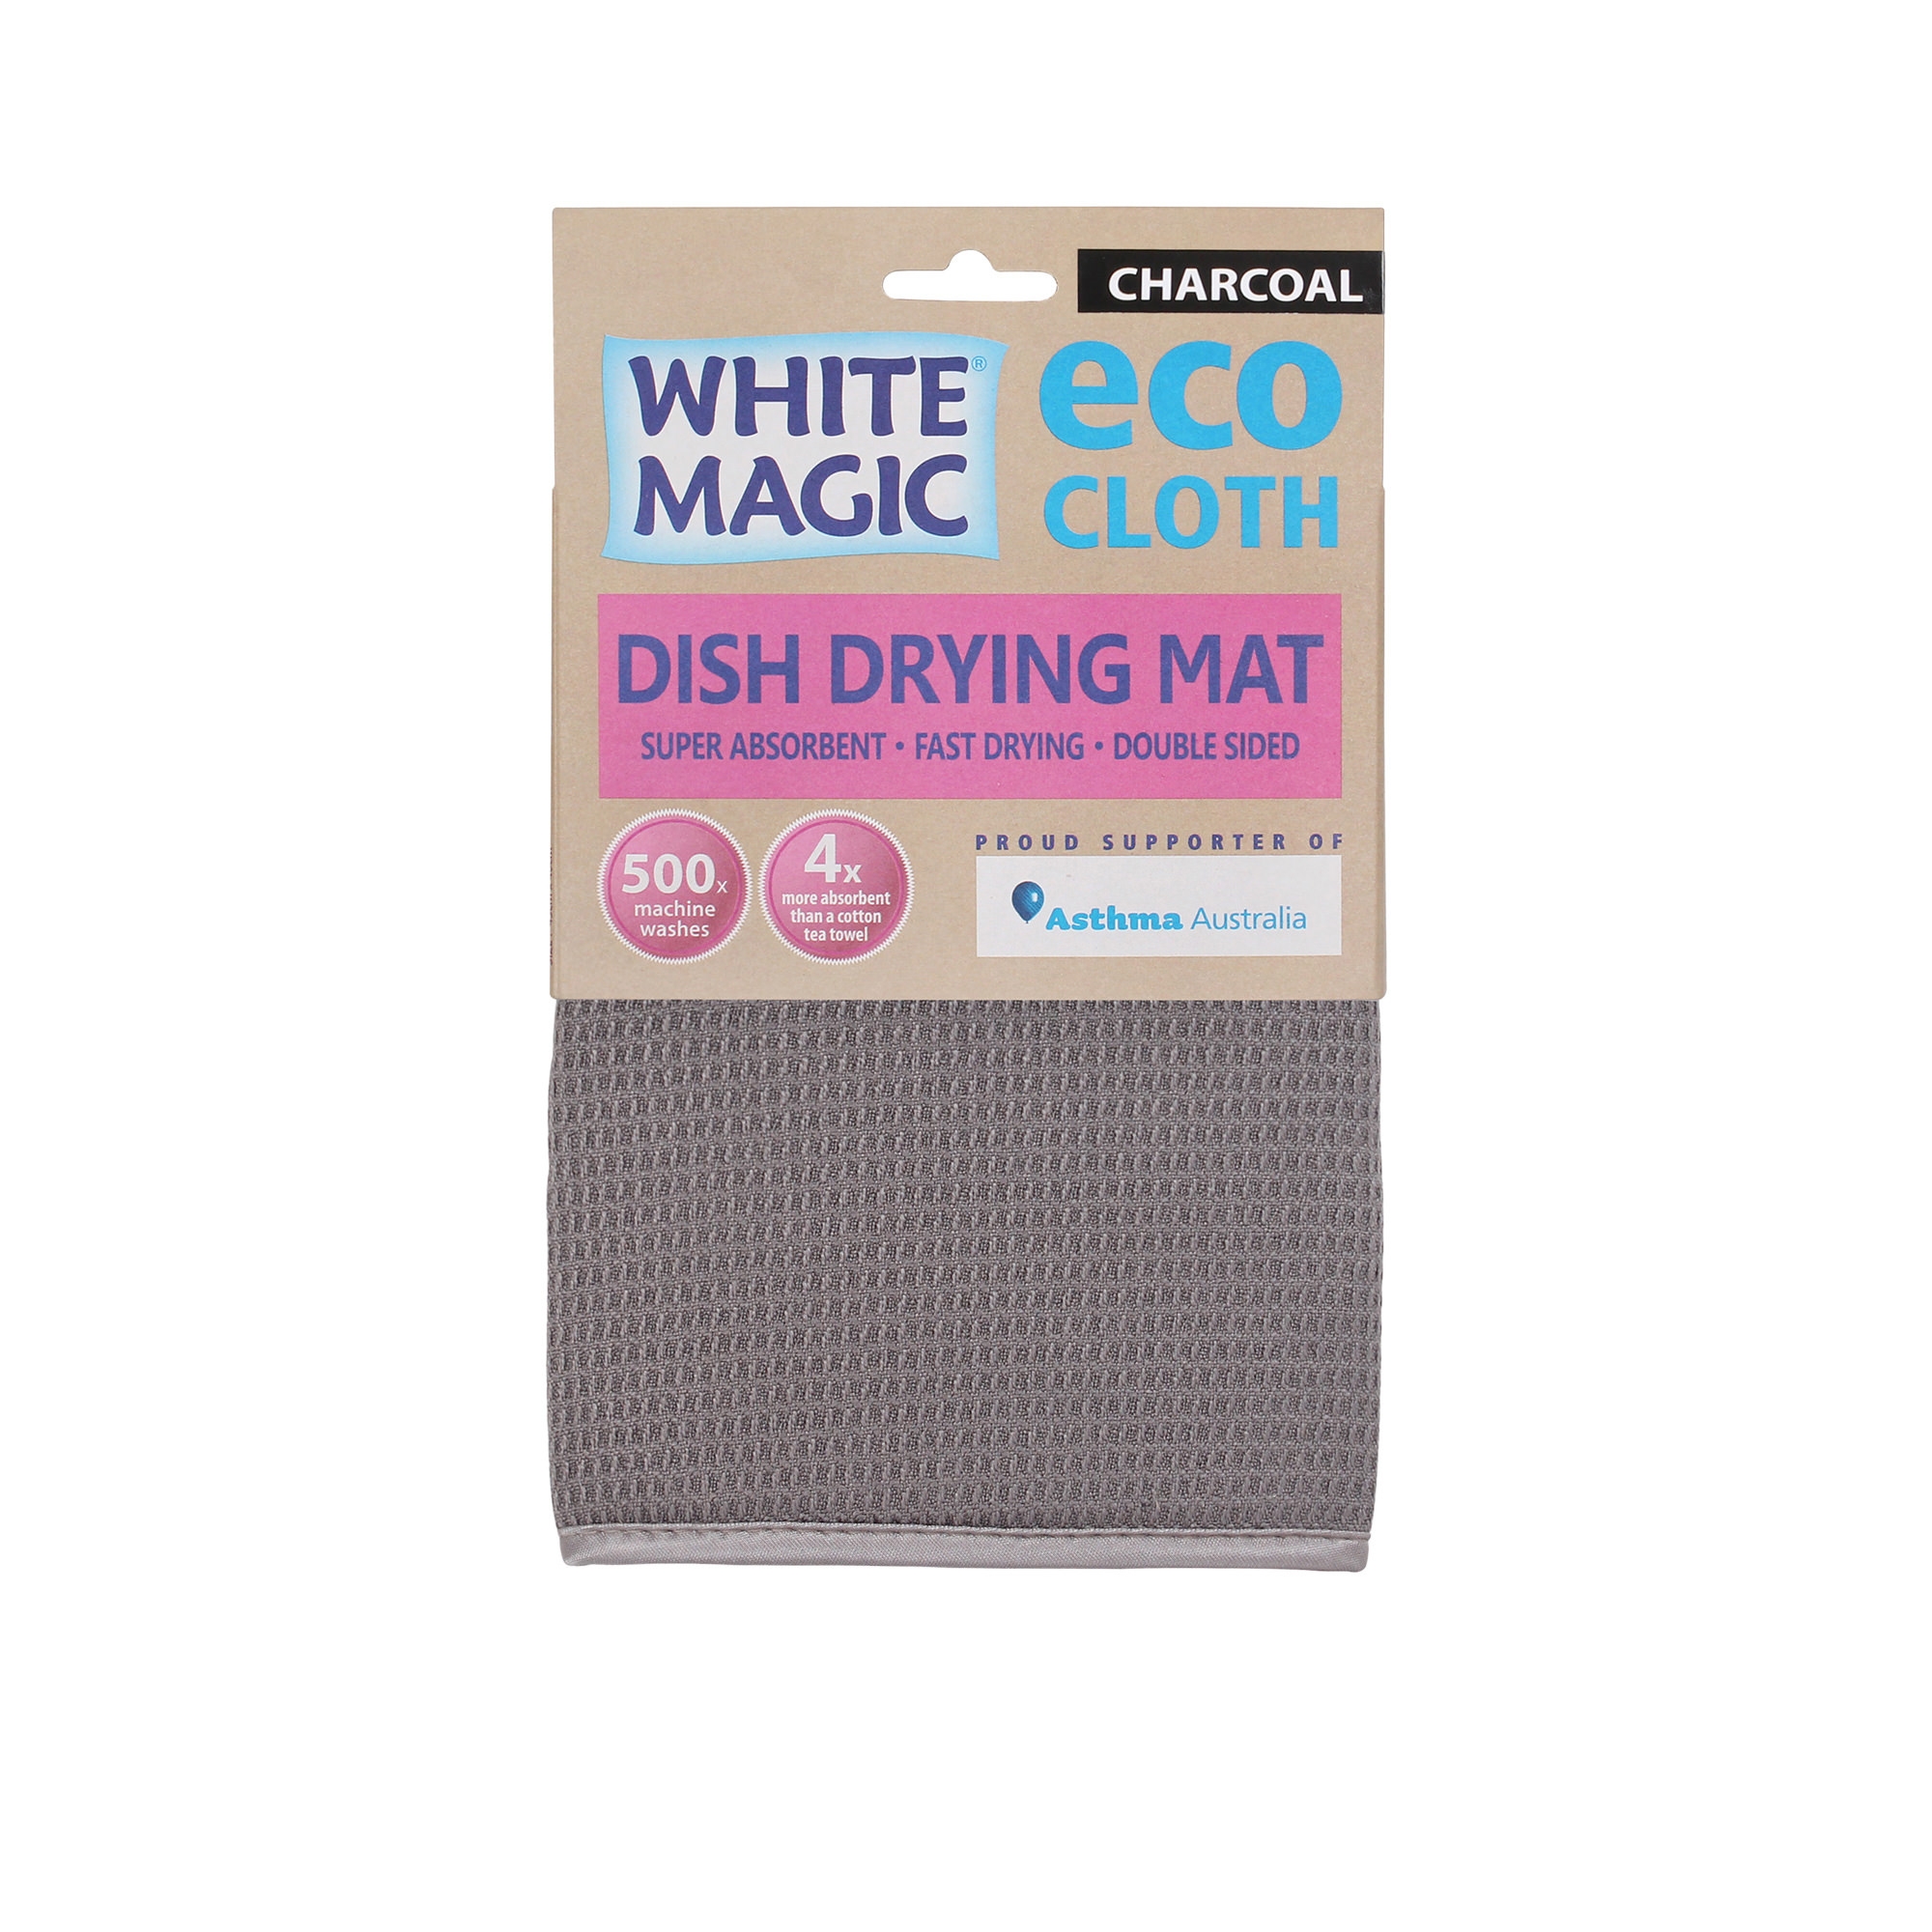 White Magic Eco Cloth Dish Drying Mat Charcoal Image 2